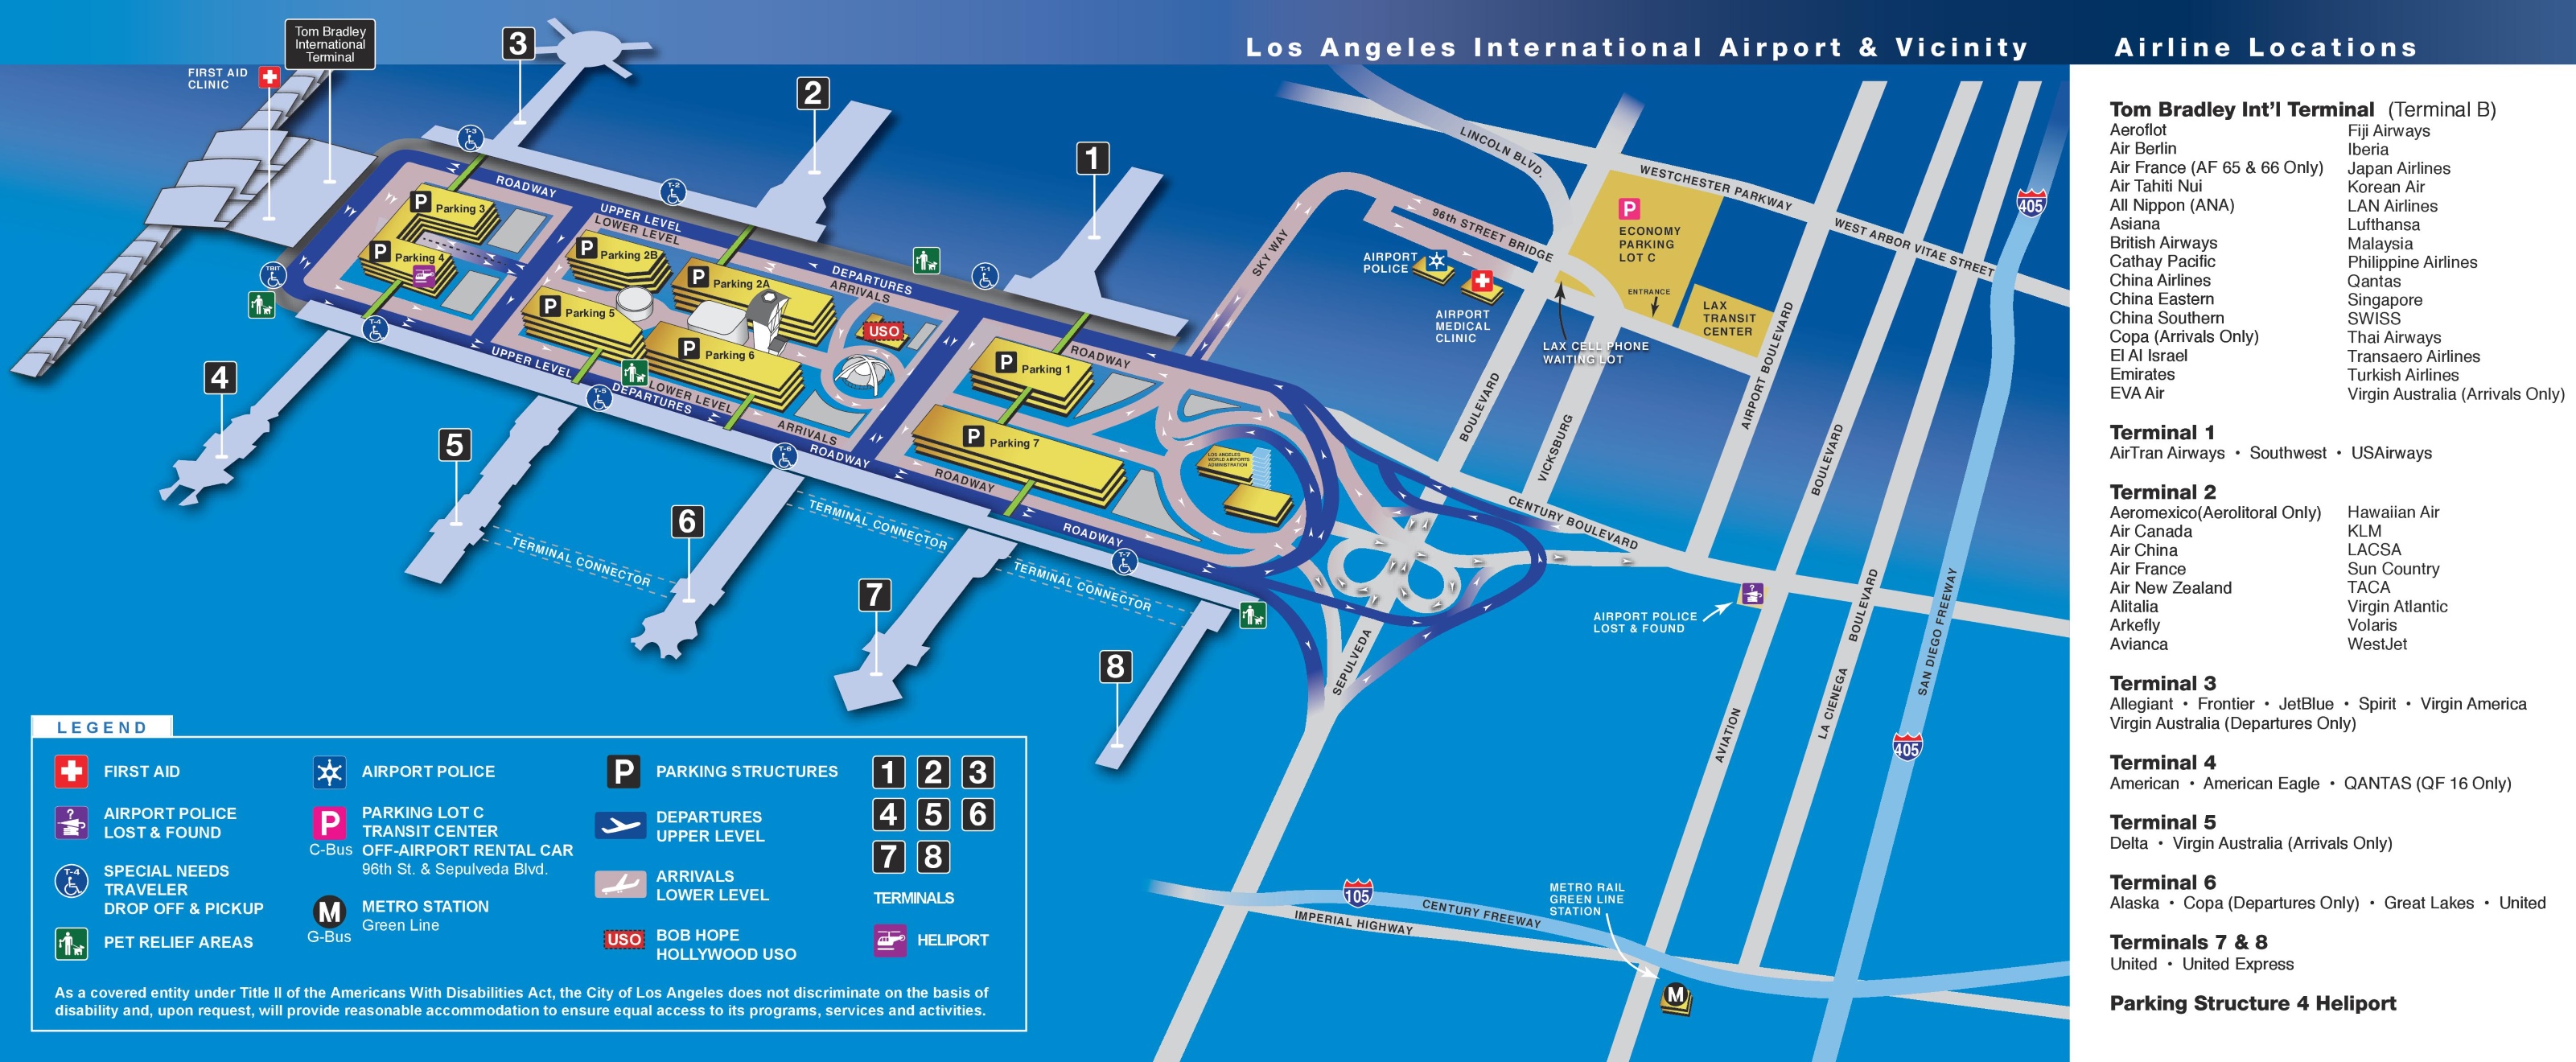 Аэропорт лос-анджелеса: онлайн-табло вылета и прилета